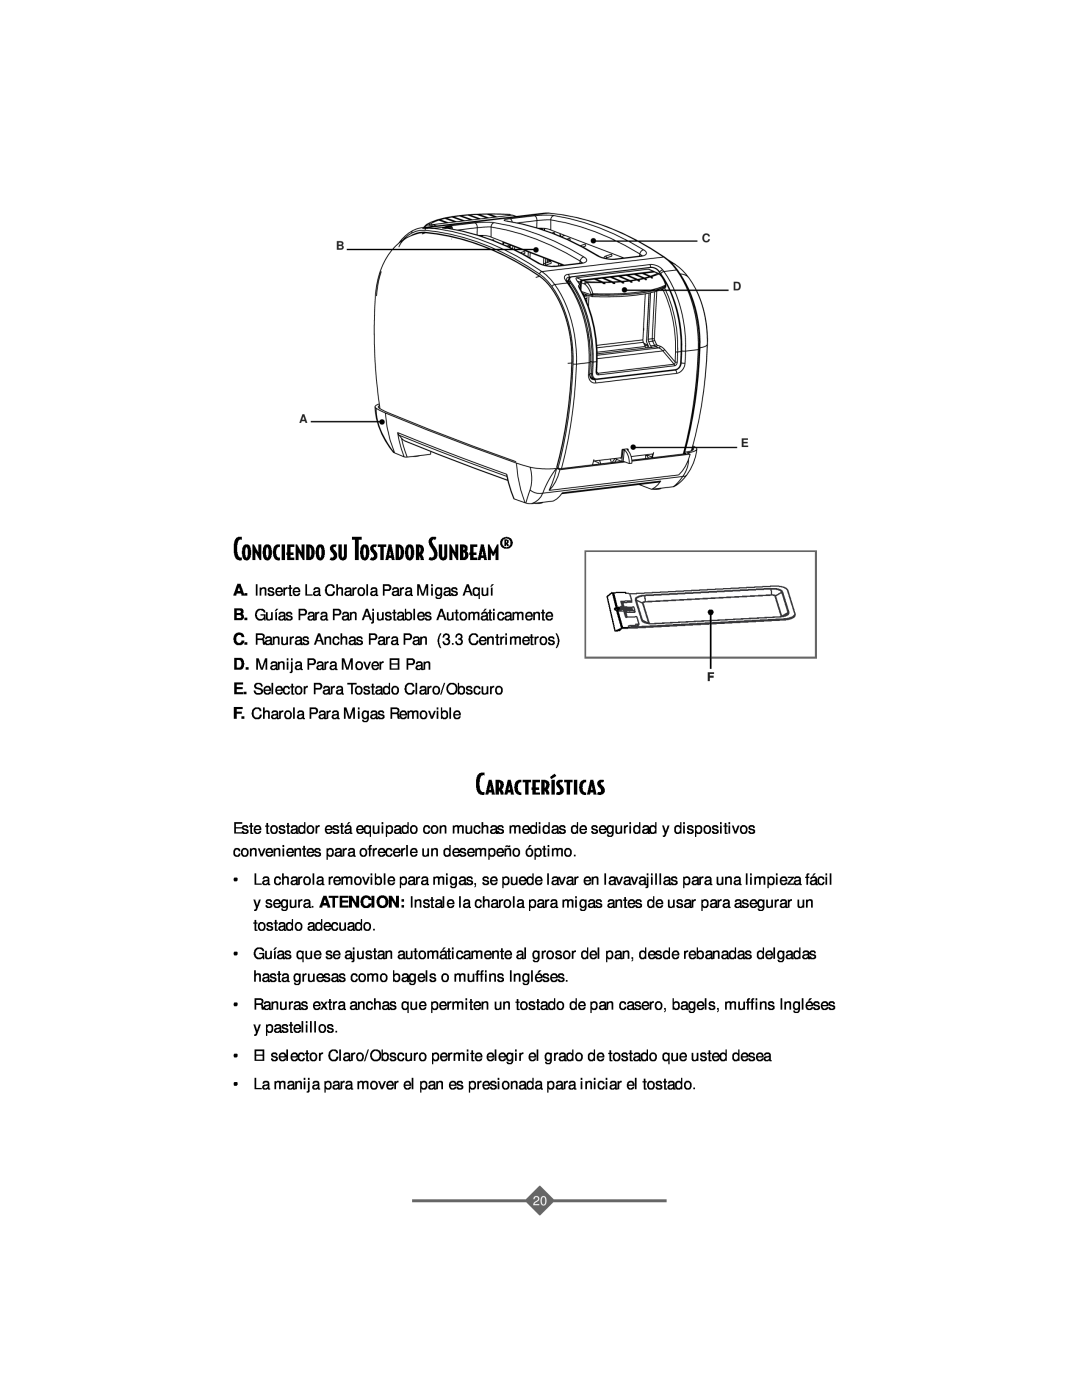 Sunbeam 3806 instruction manual Caracter’sticas, Conociendo su Tostador Sunbeam¨ 